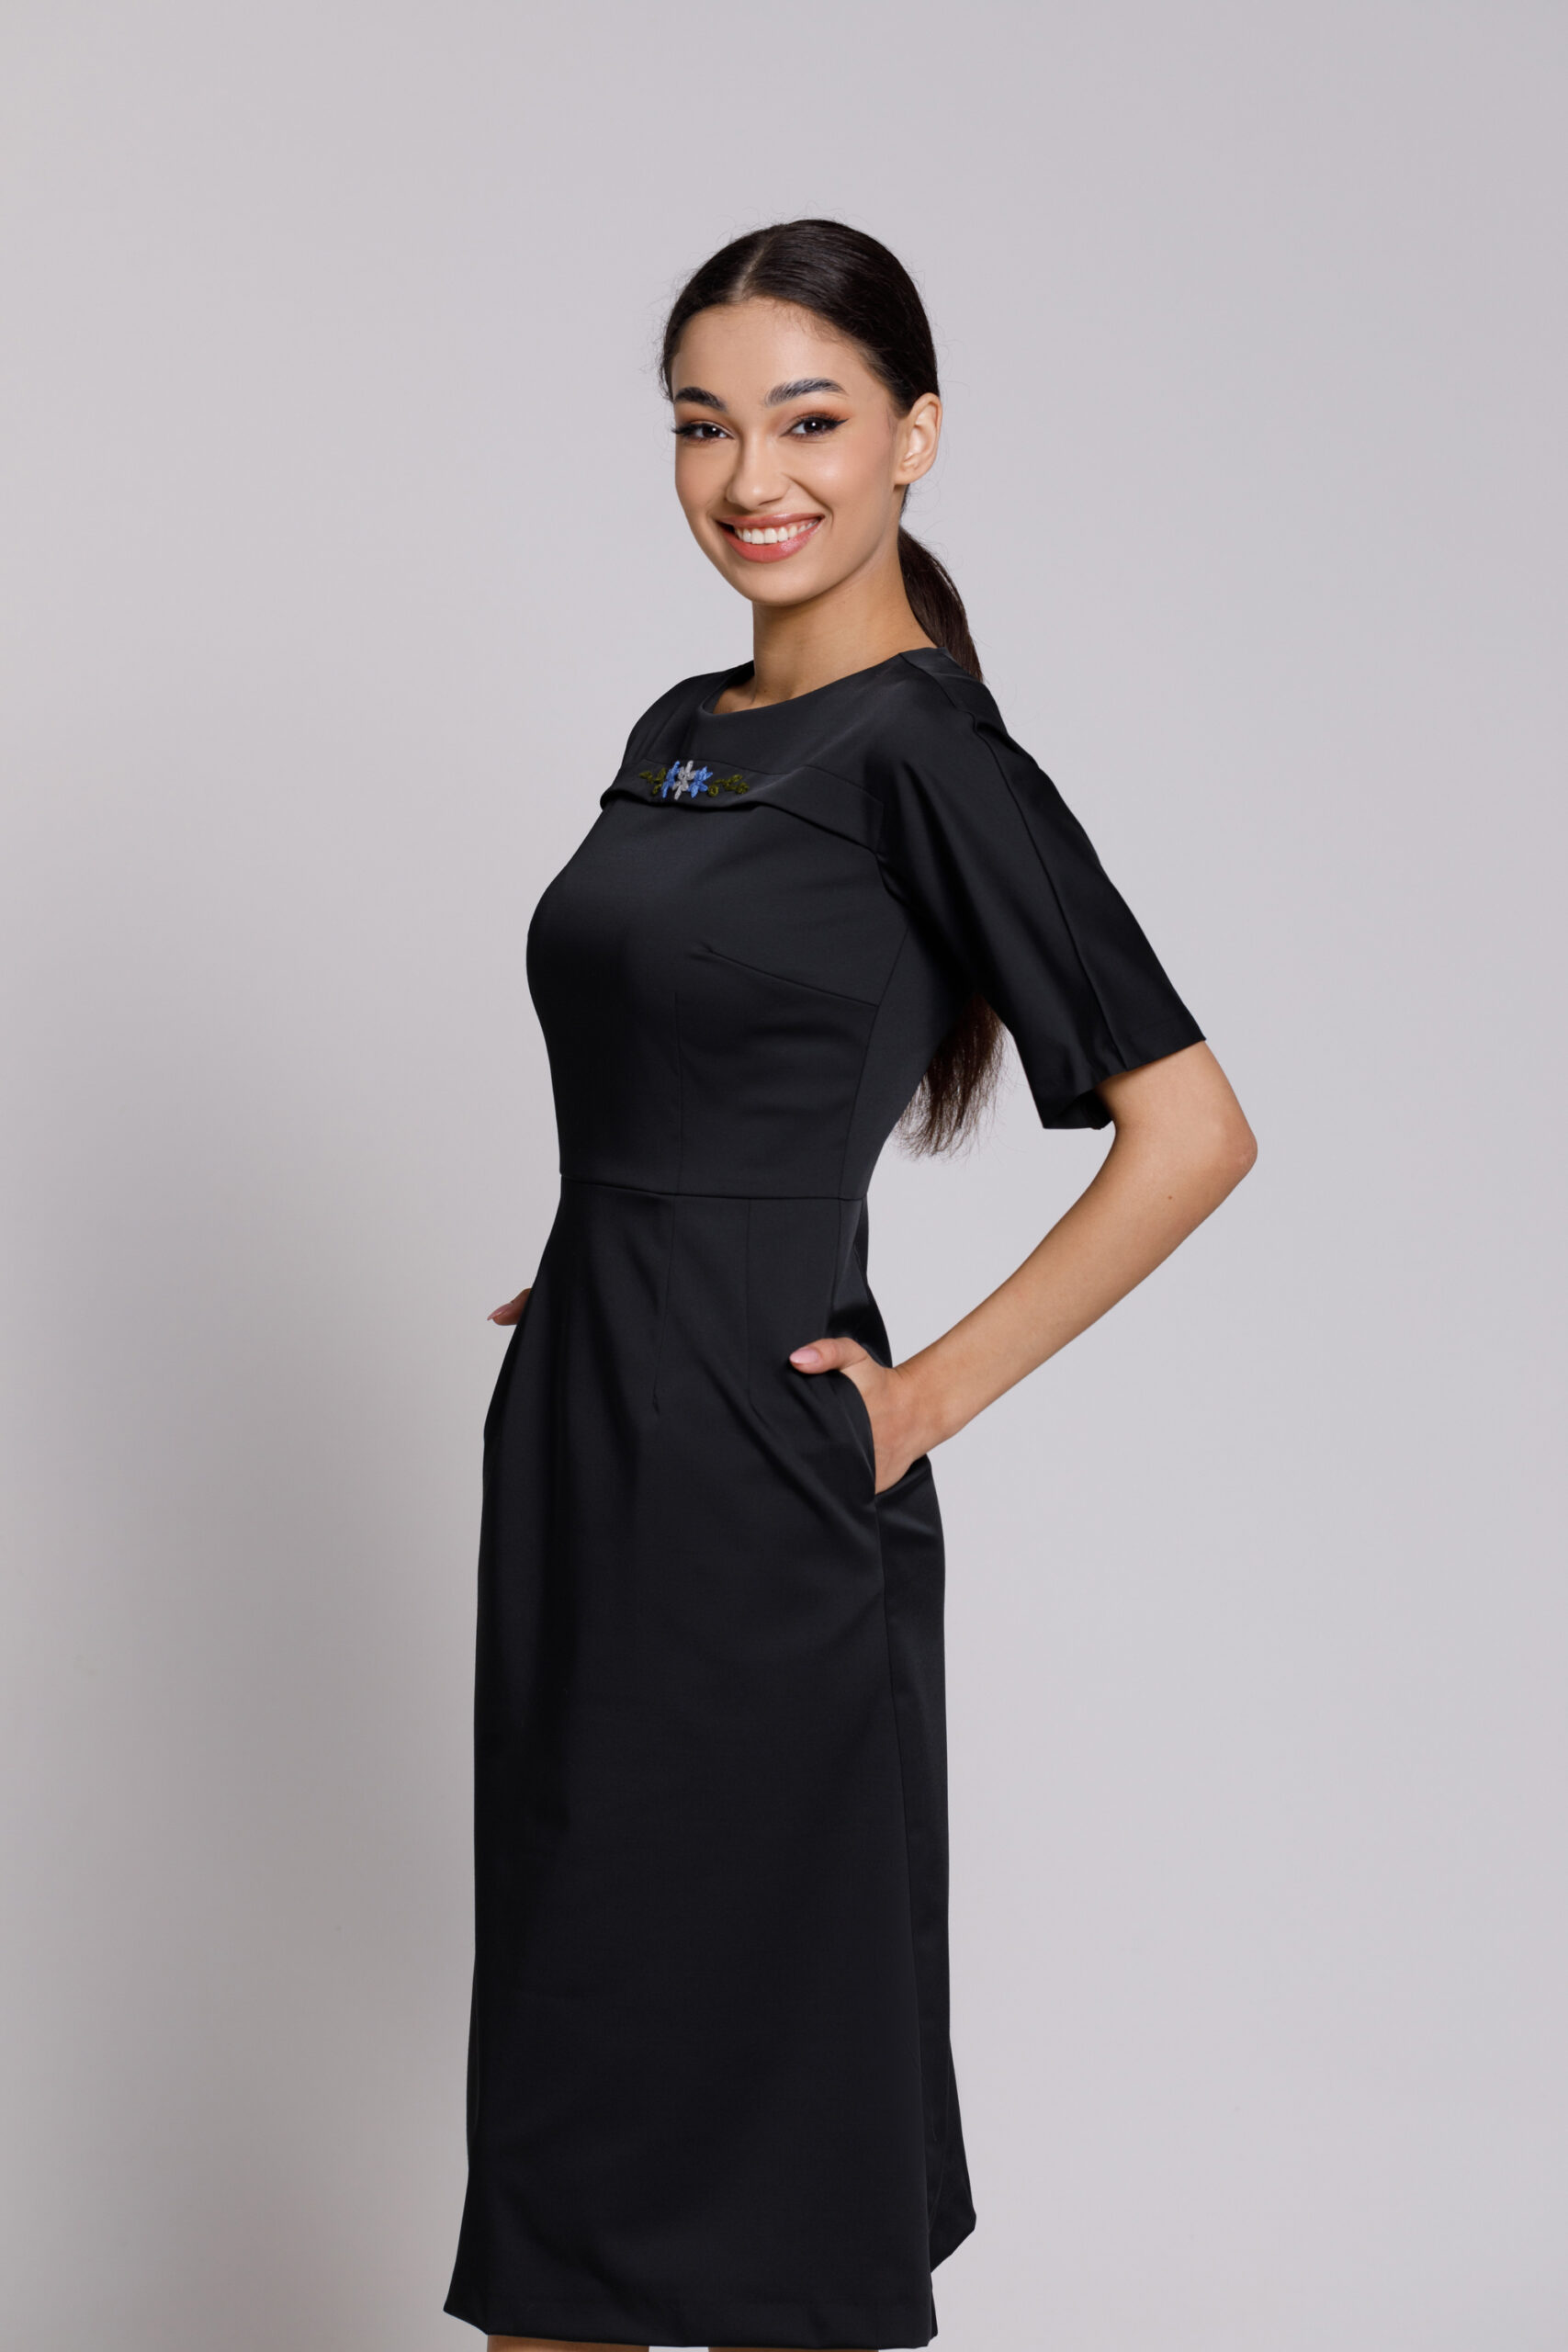 DARLA Elegant black dress with floral embroidery. Natural fabrics, original design, handmade embroidery